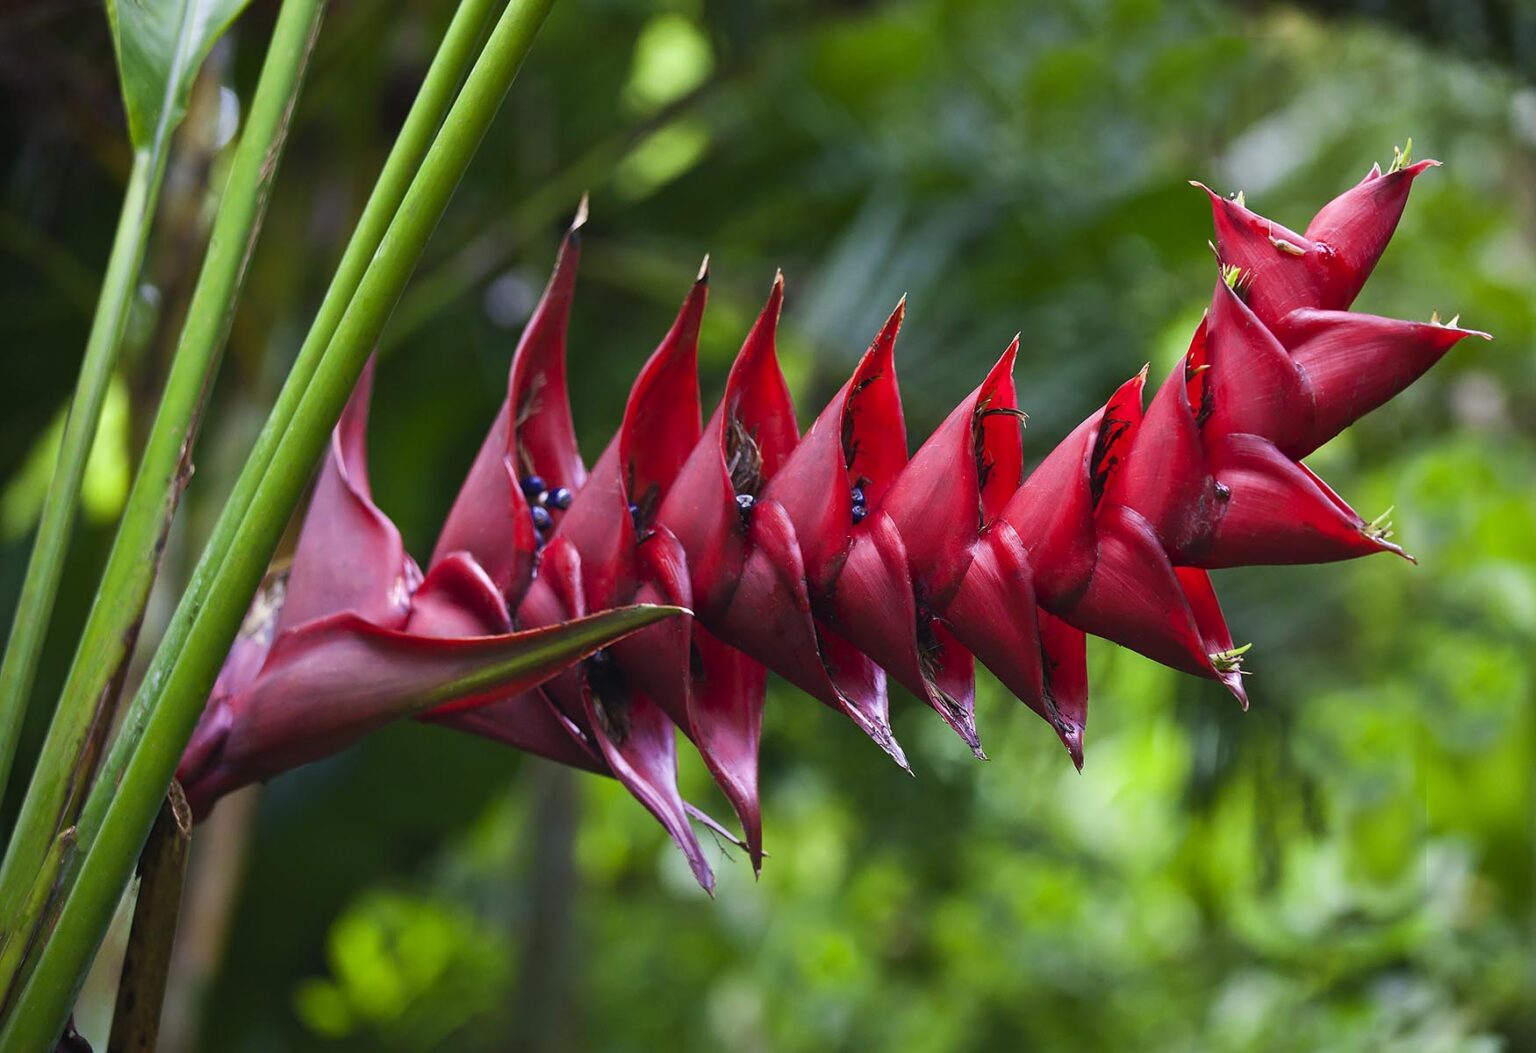 Exotic tropical plants bloom at the BOTANICAL GARDEN UBUD - BALI, INDONESIA